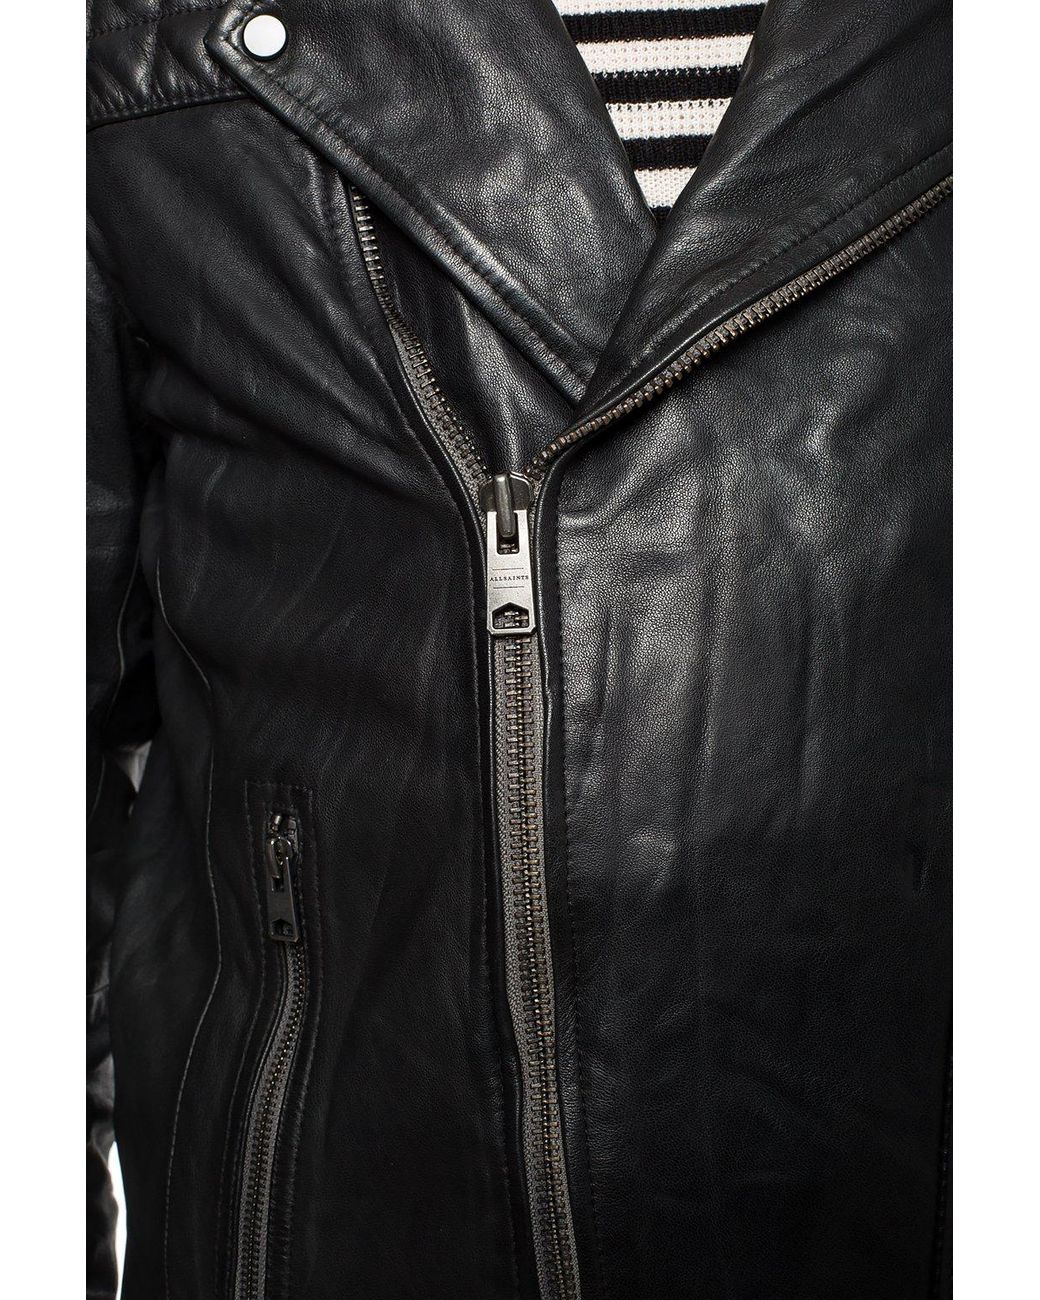 AllSaints 'conroy' Leather Jacket in Black for Men | Lyst UK